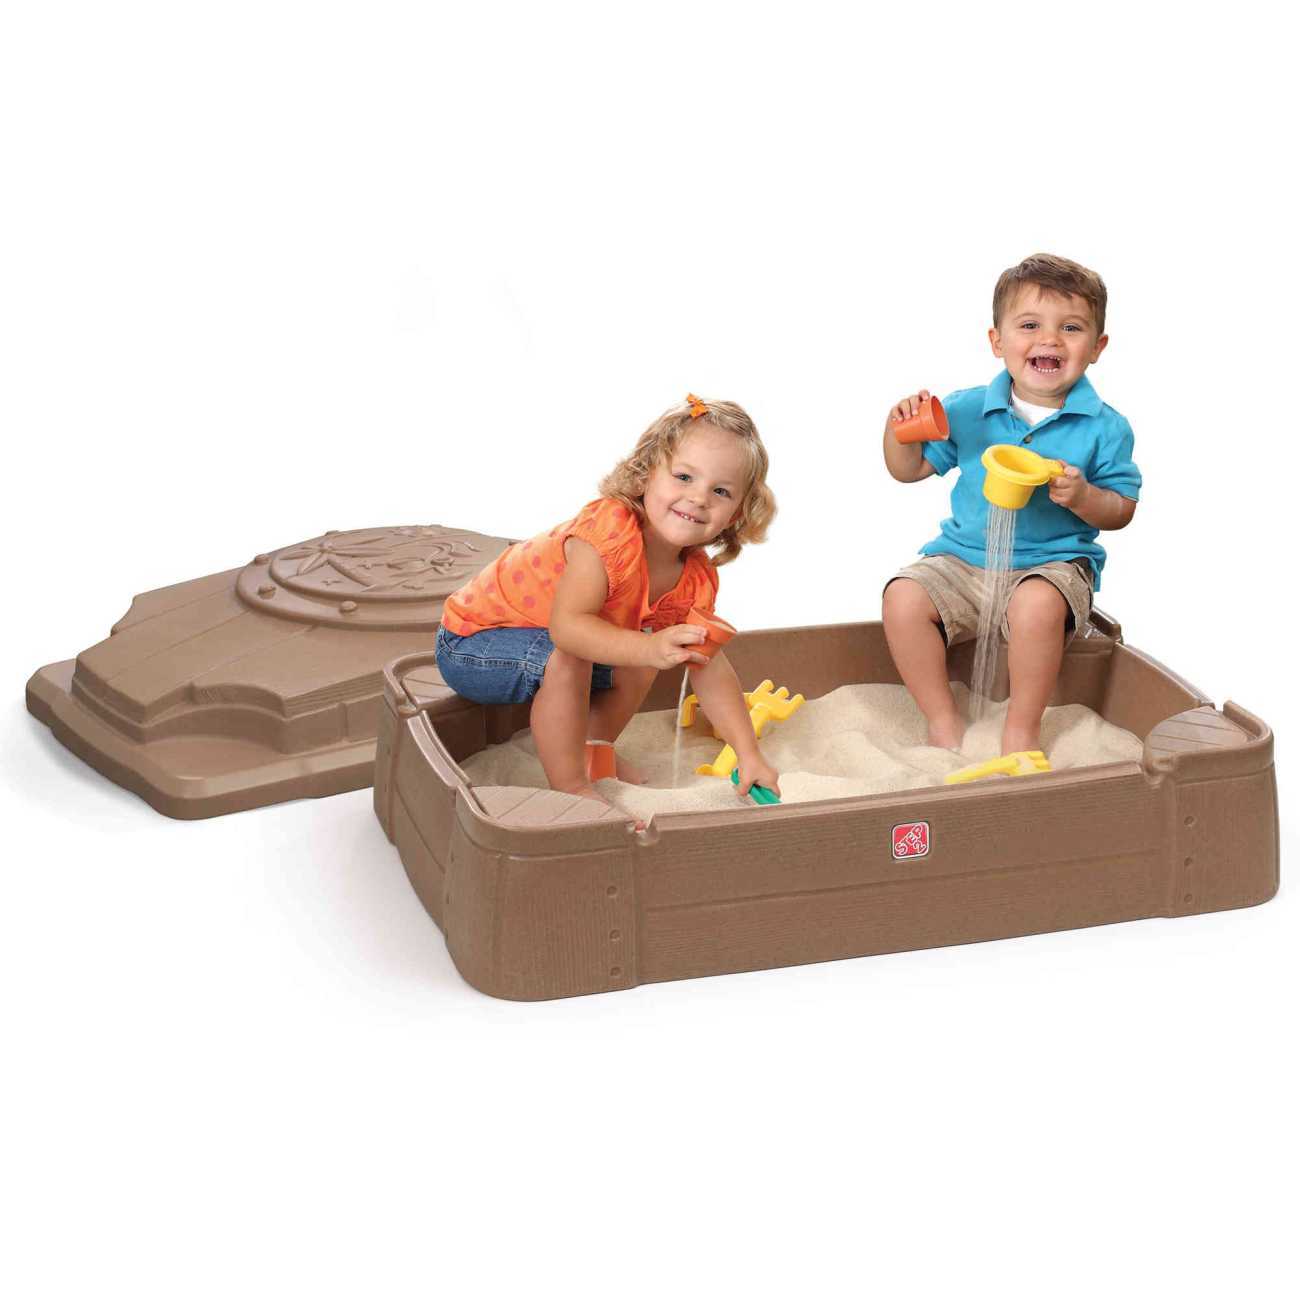 Sandkasten Play & Store Sandbox